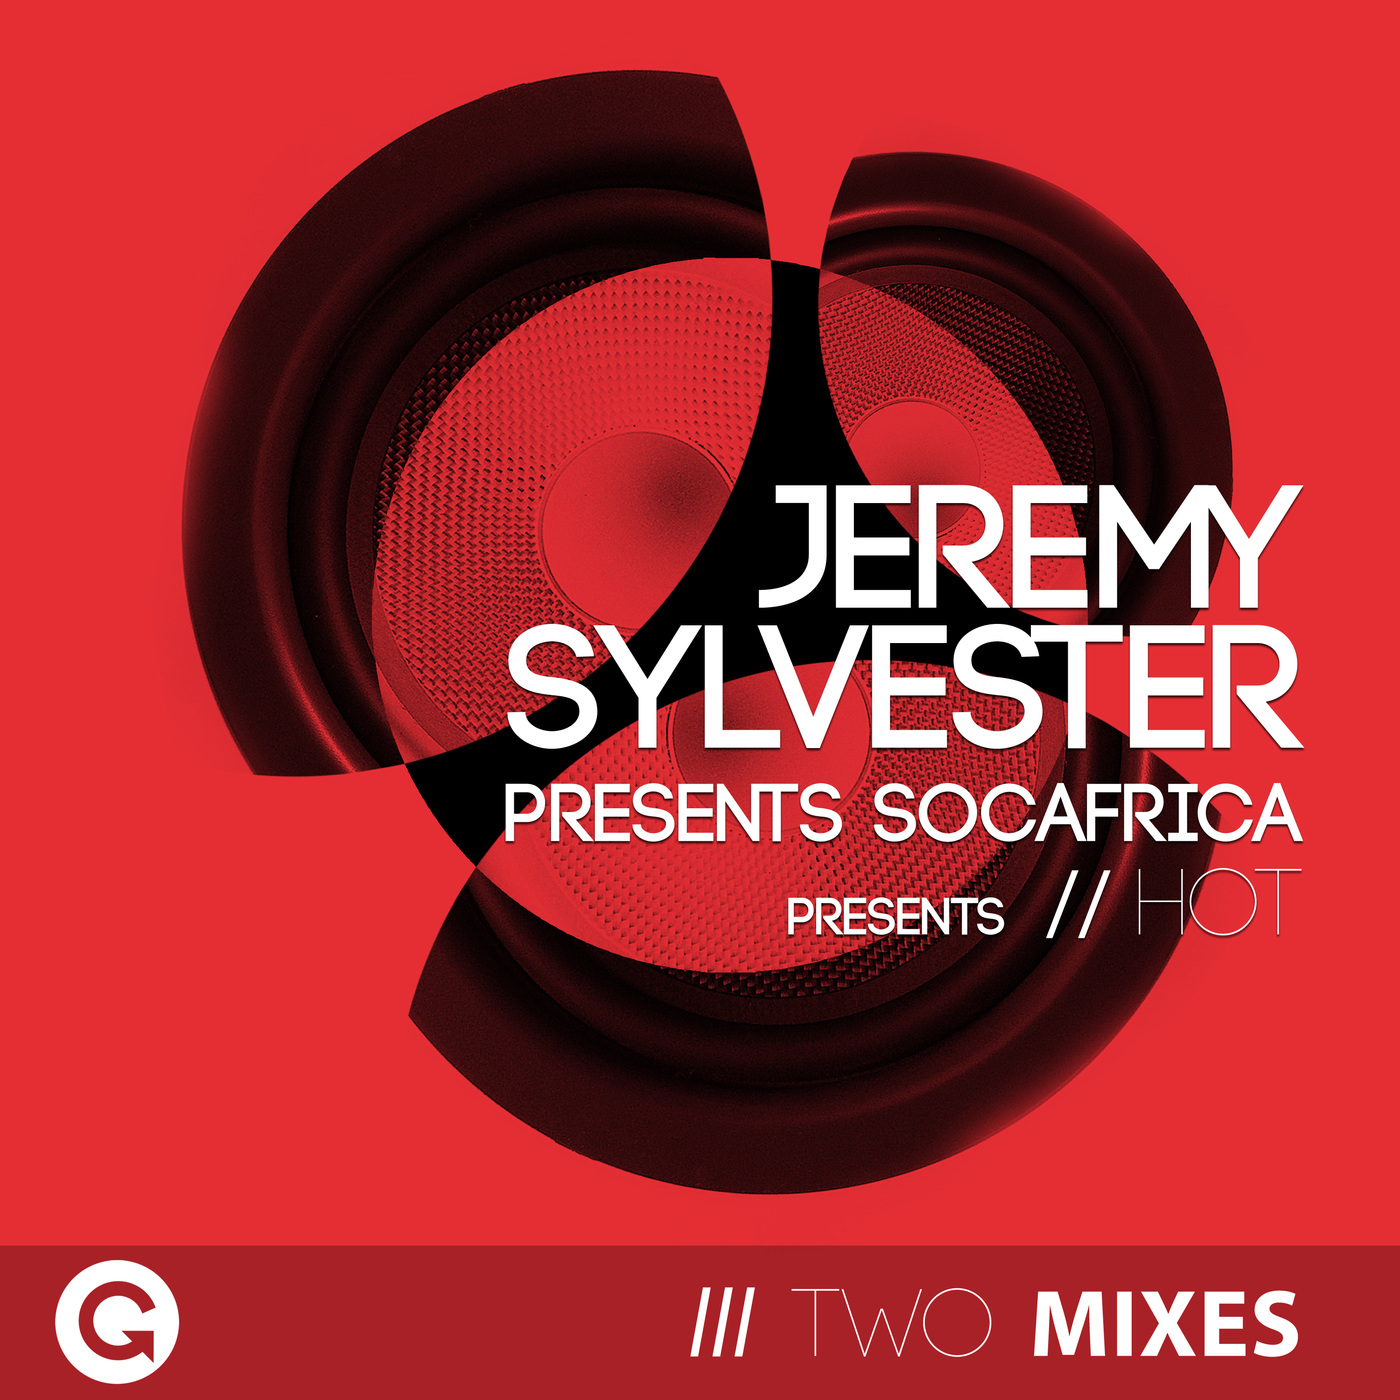 Jeremy Sylvester pres. Socafrica - Hot / GRAND Music